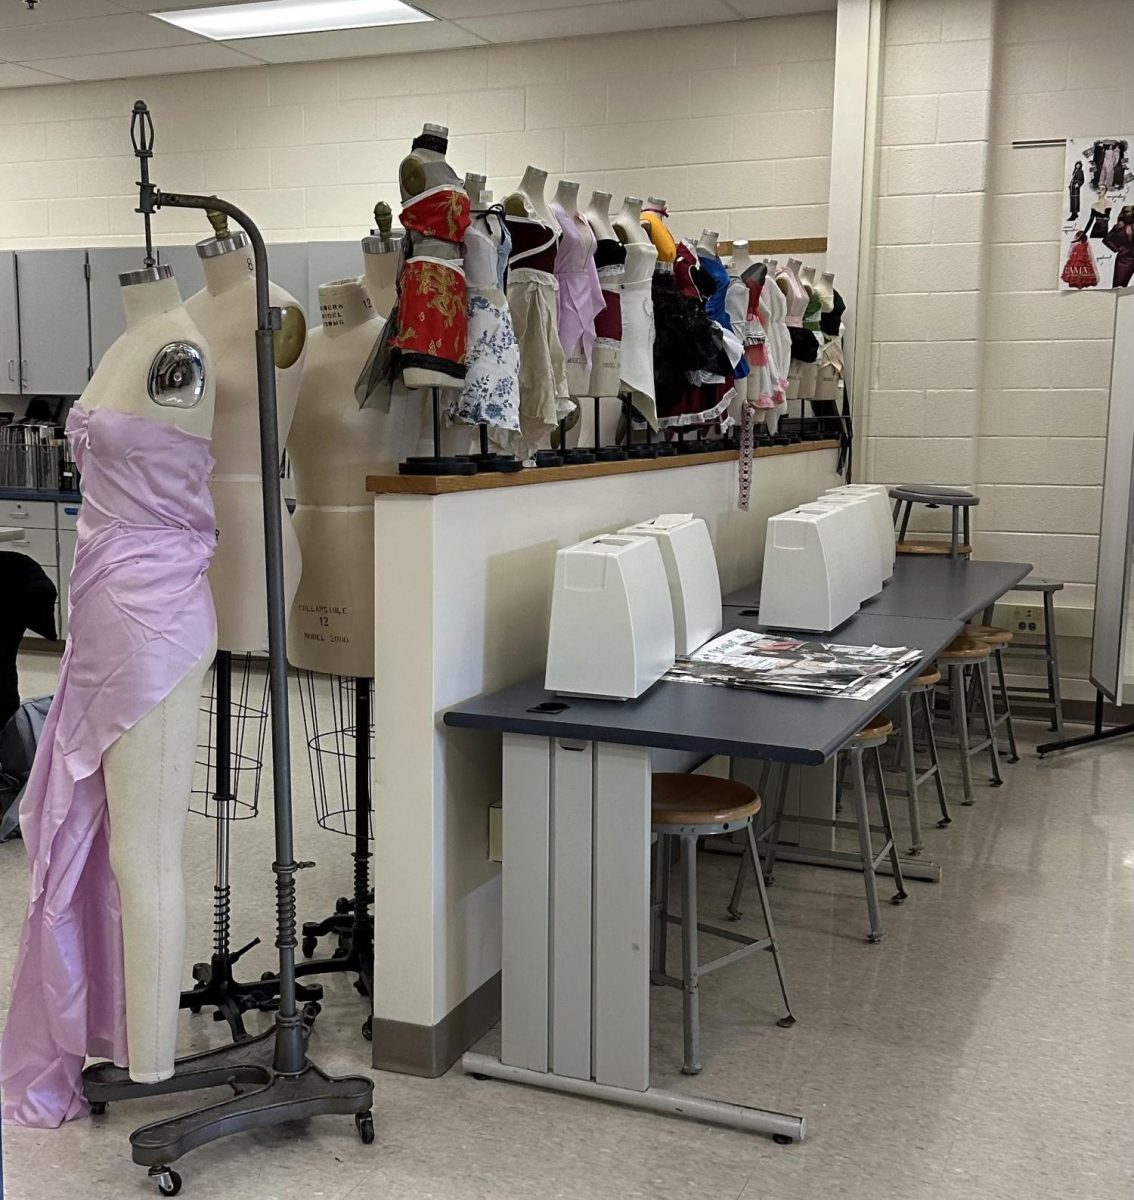 Inside fashion careers classroom at Fairfax highschool